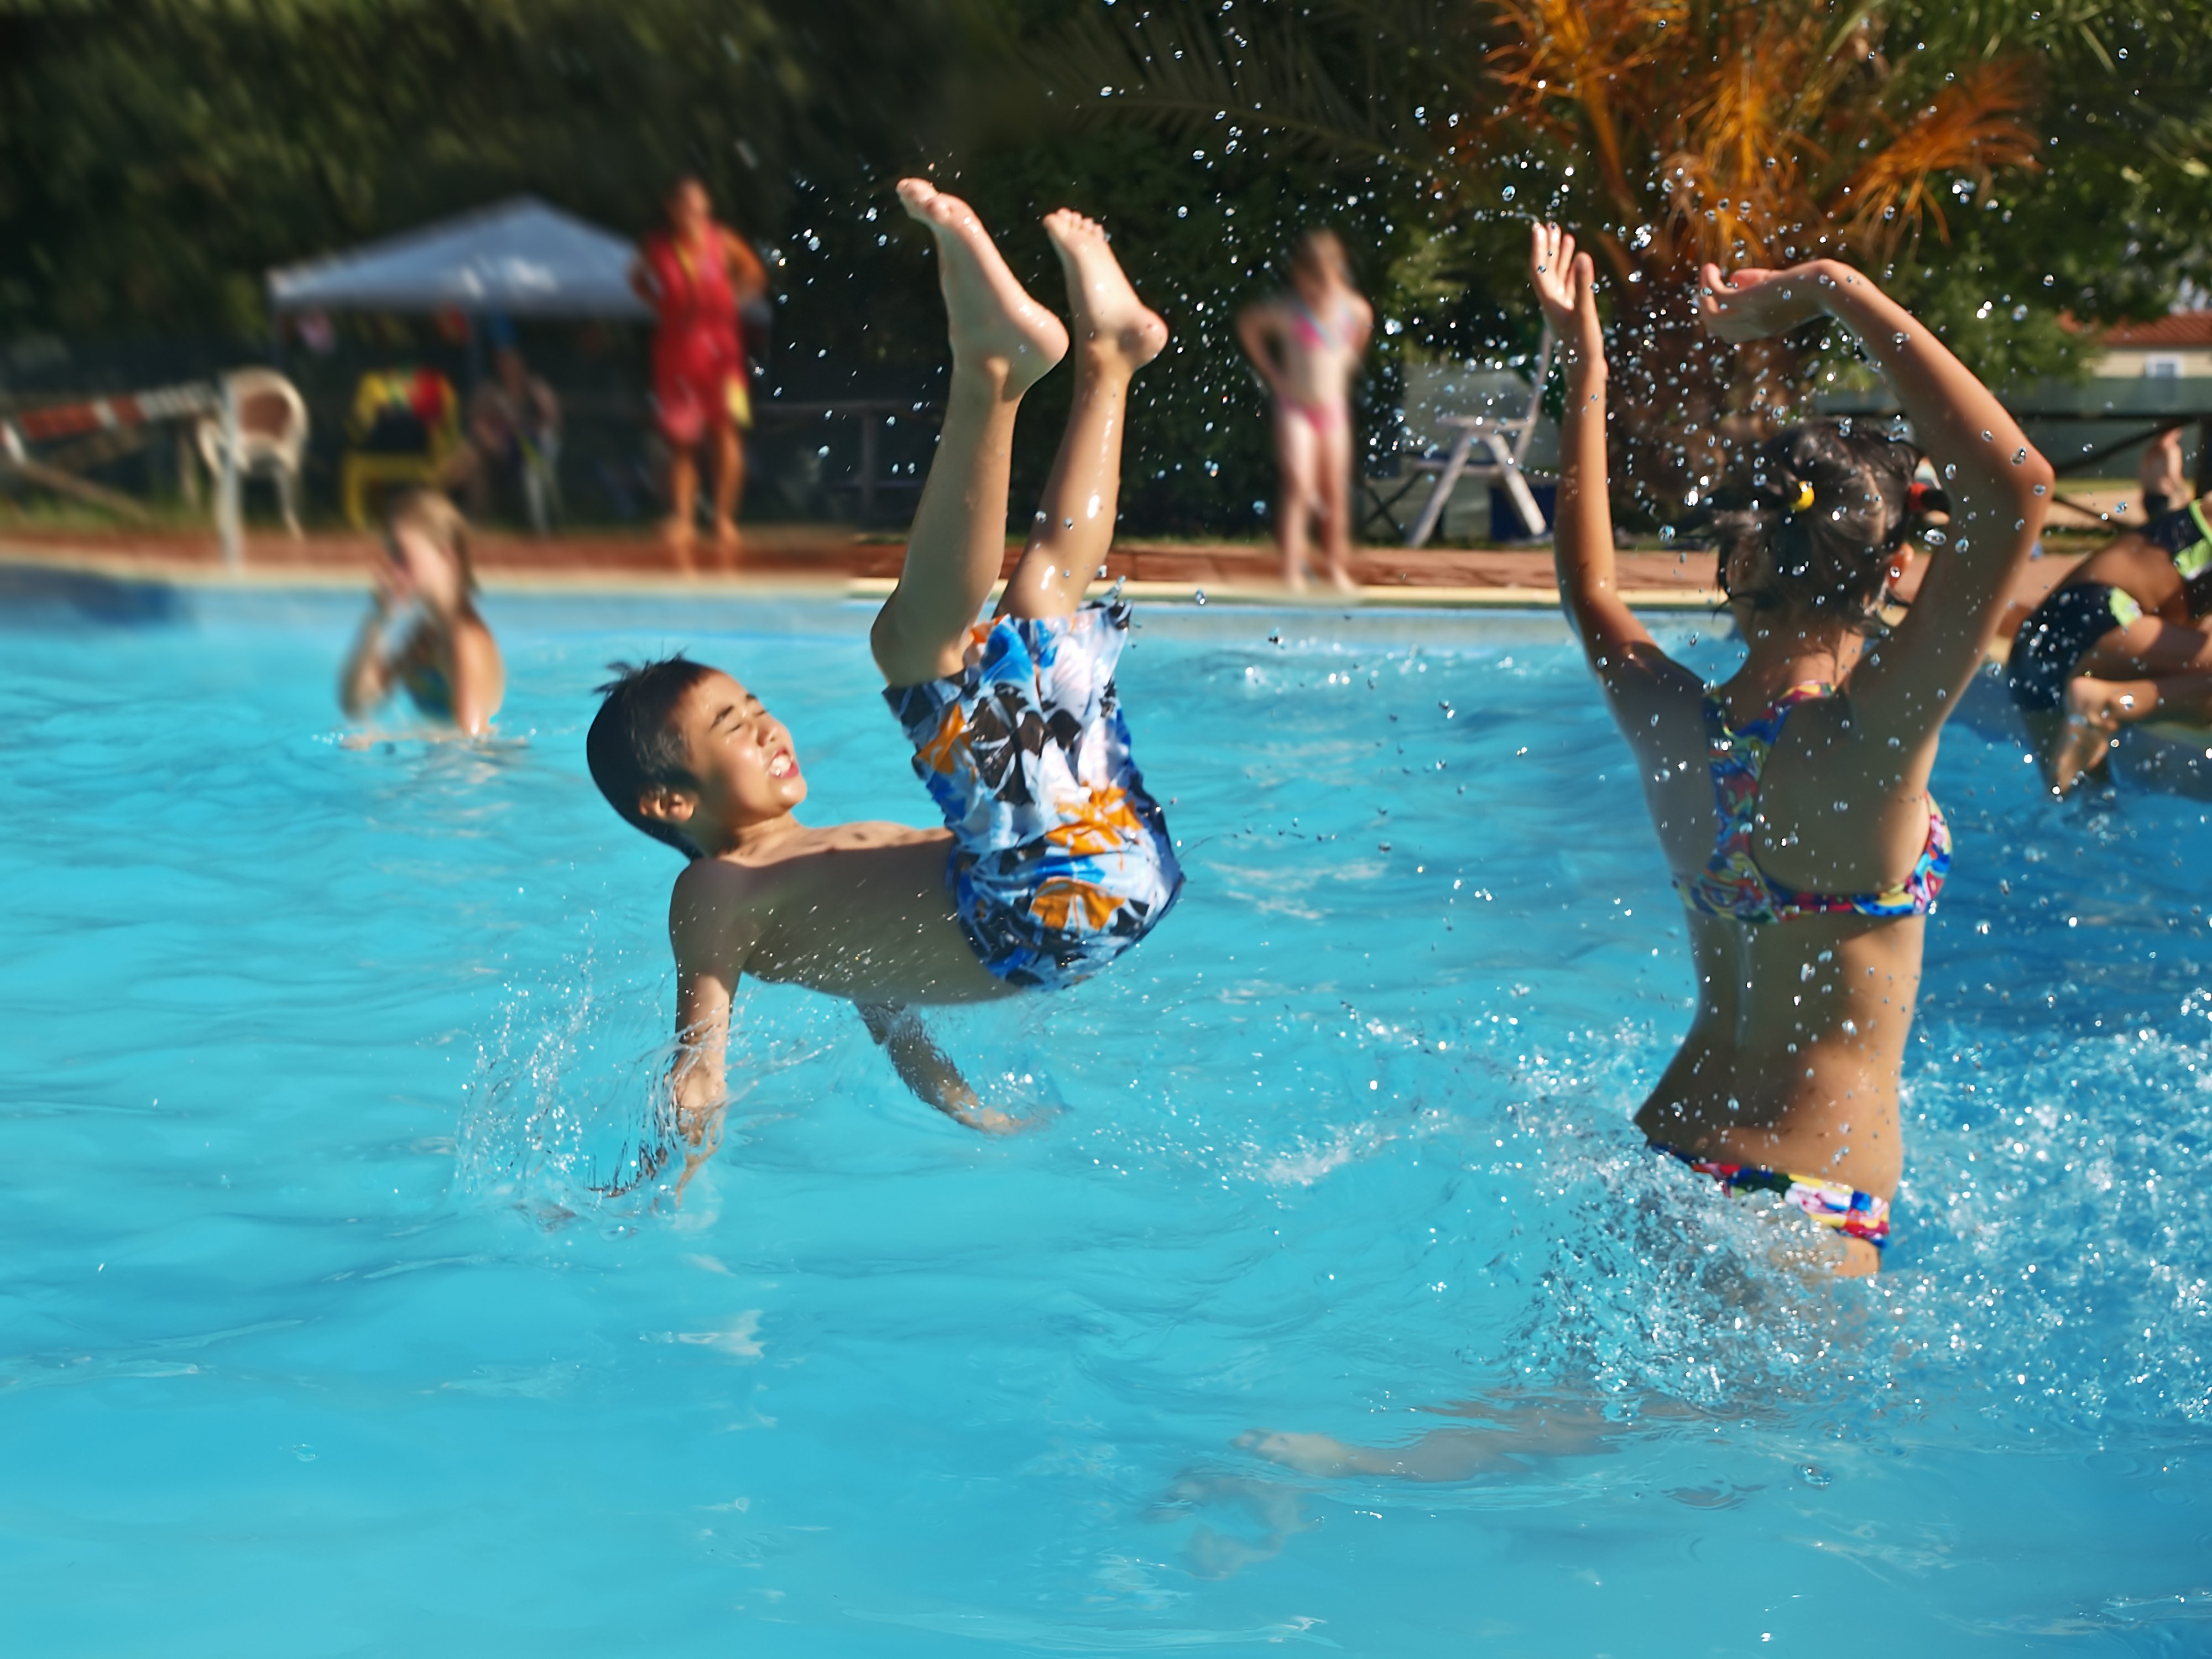 Swimming activities. Лето бассейн. Летний бассейн. Веселье в бассейне. Дети лето вода.